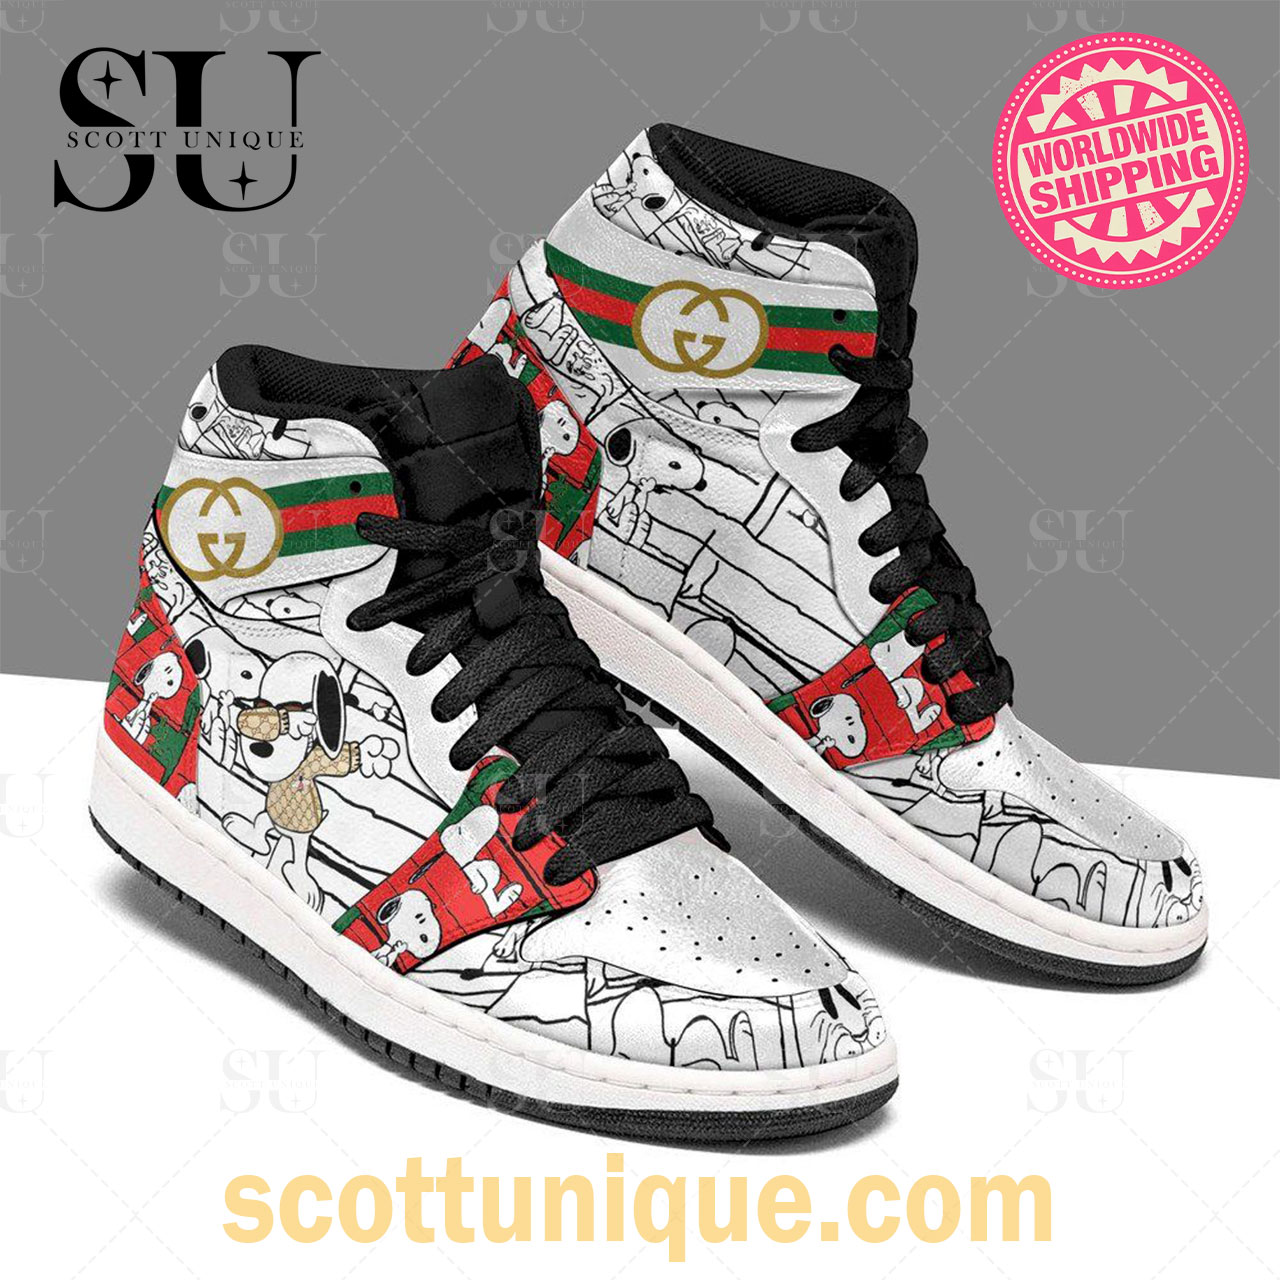 Gucci Snoopy Dab Jordan 1 High Sneaker